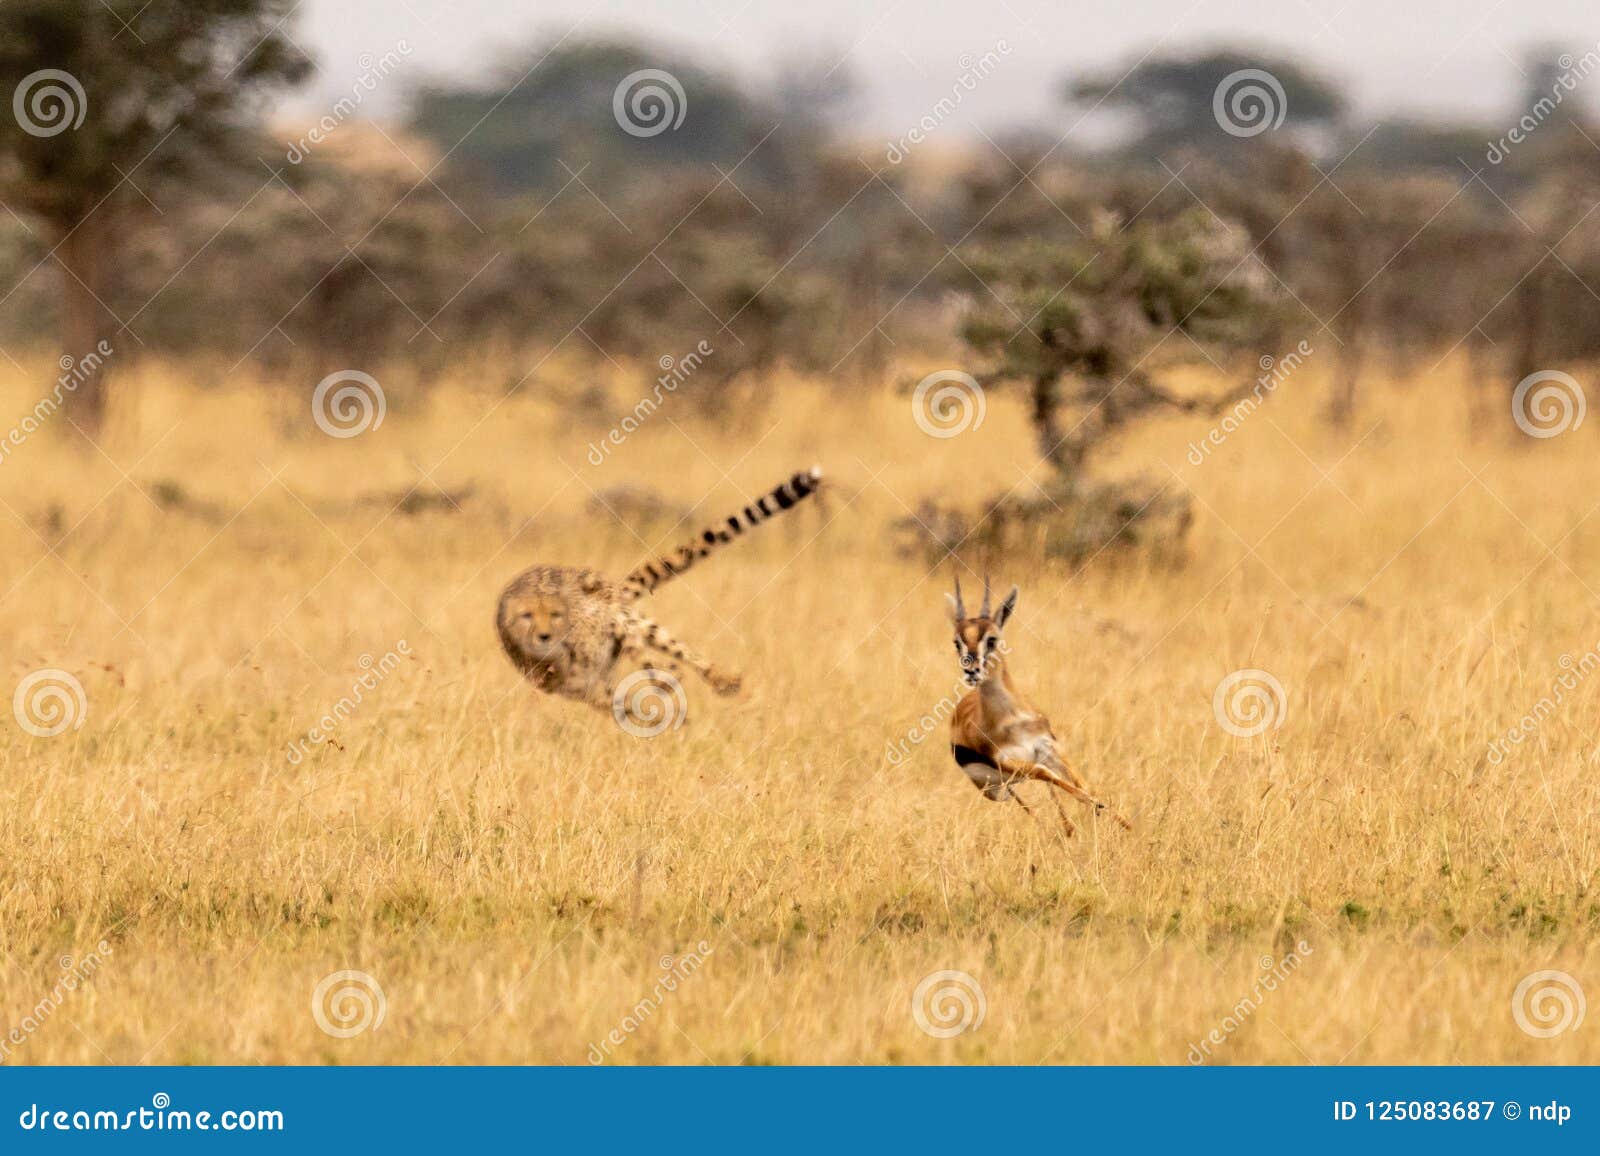 cheetah chasing thomson gazelle among whistling thorns